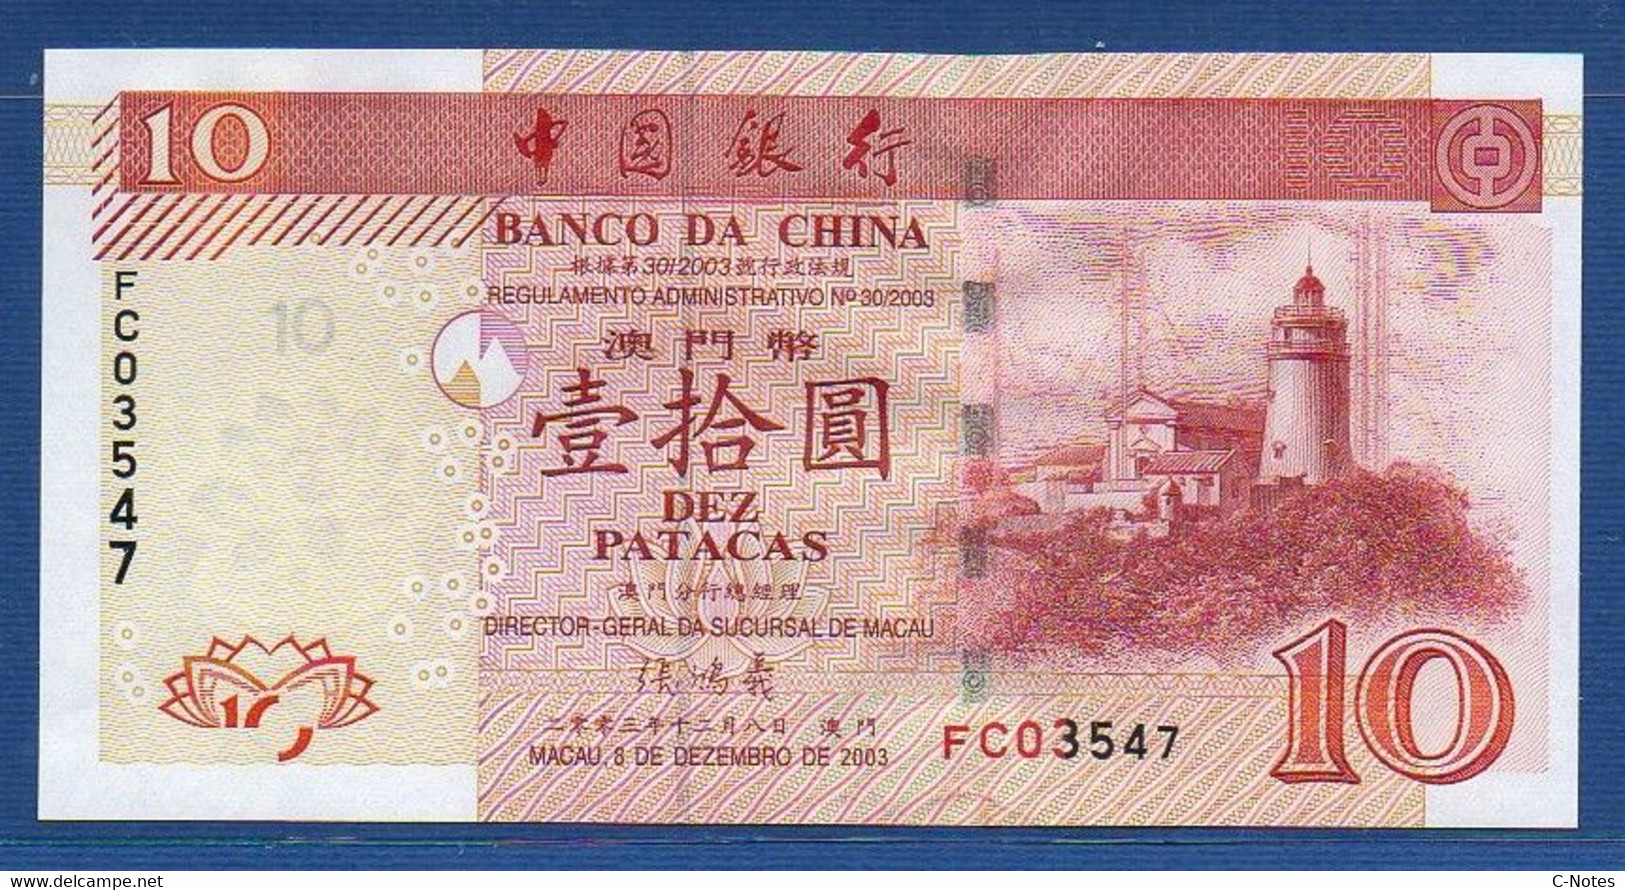 MACAU - Banco Da China - P.102 – 10 Patacas 2003 UNC, Serie FC 03547 - Macao